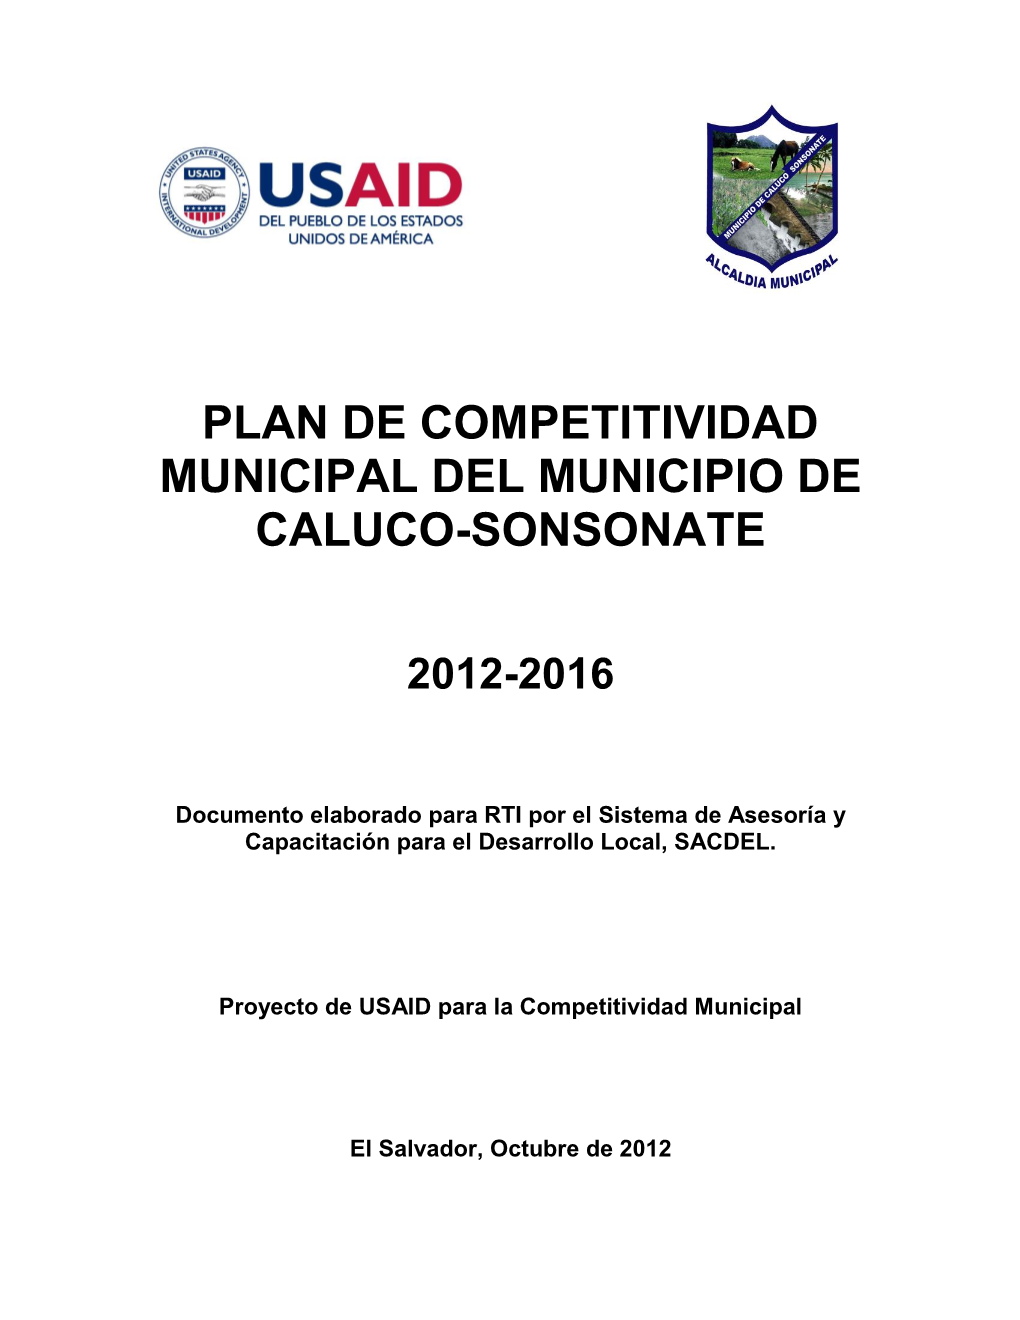 Plan De Competitividad Municipal Del Municipio De Caluco-Sonsonate